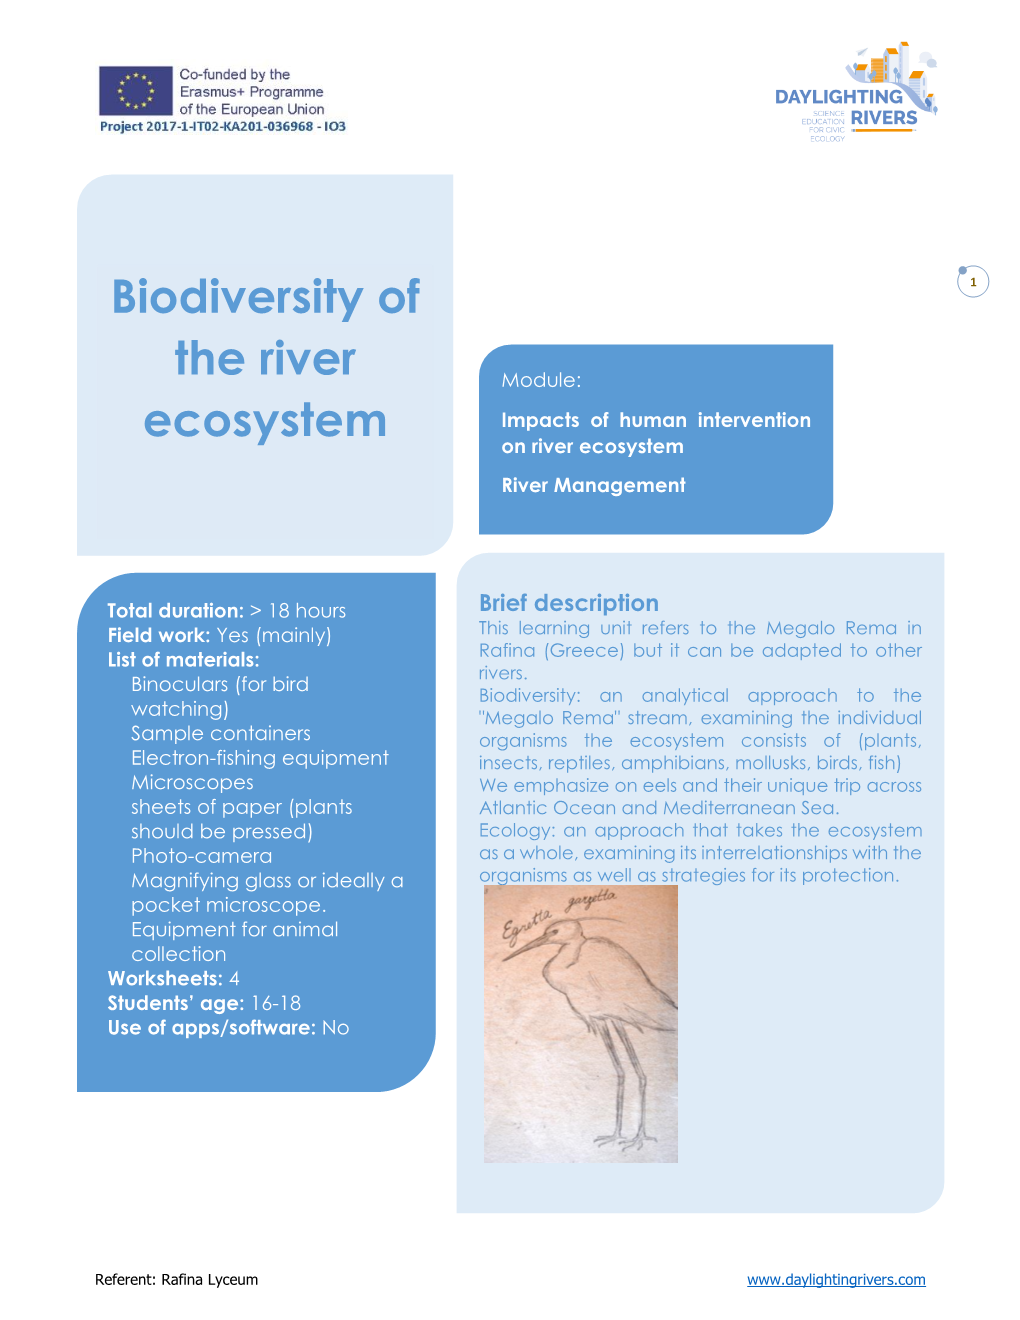 Biodiversity of the River Ecosystem